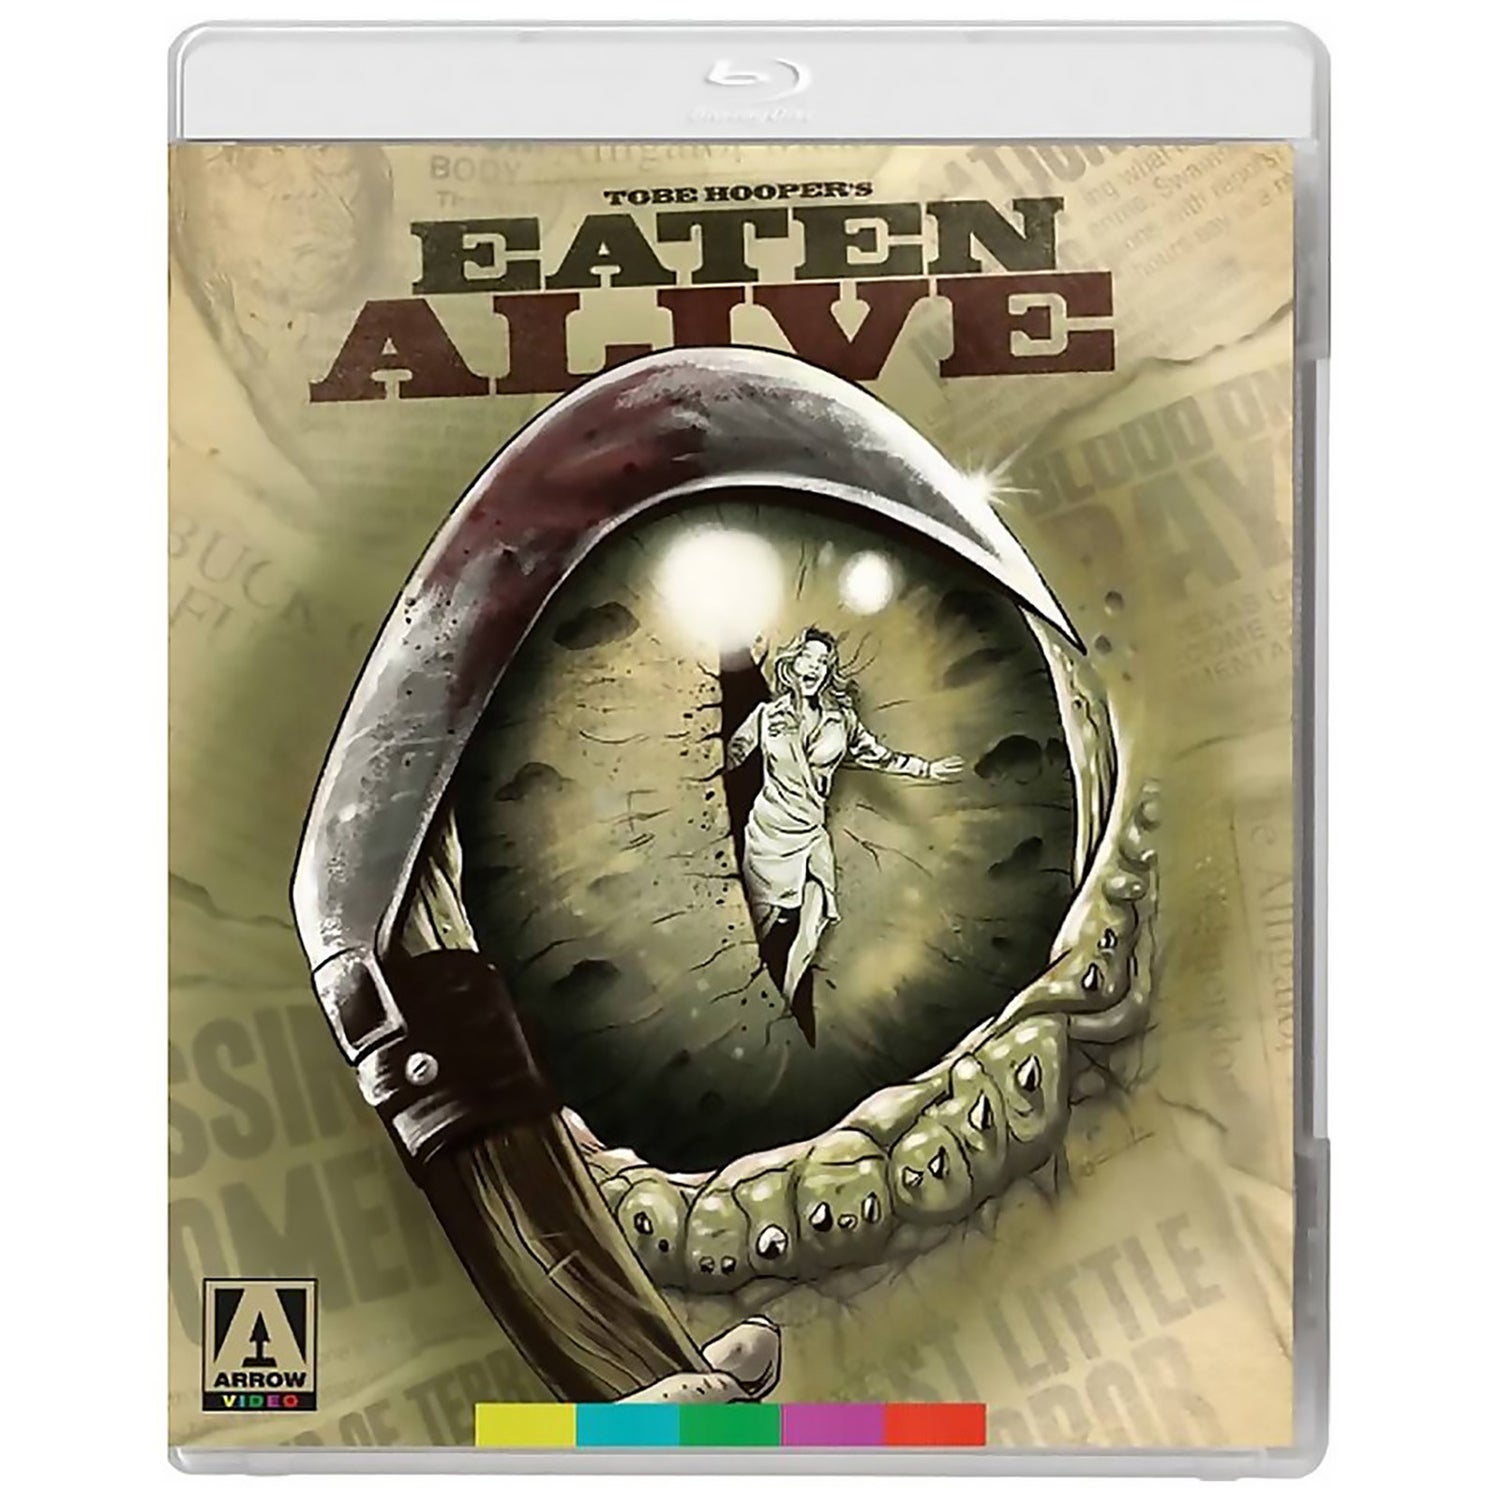 Eaten Alive Blu-ray+DVD